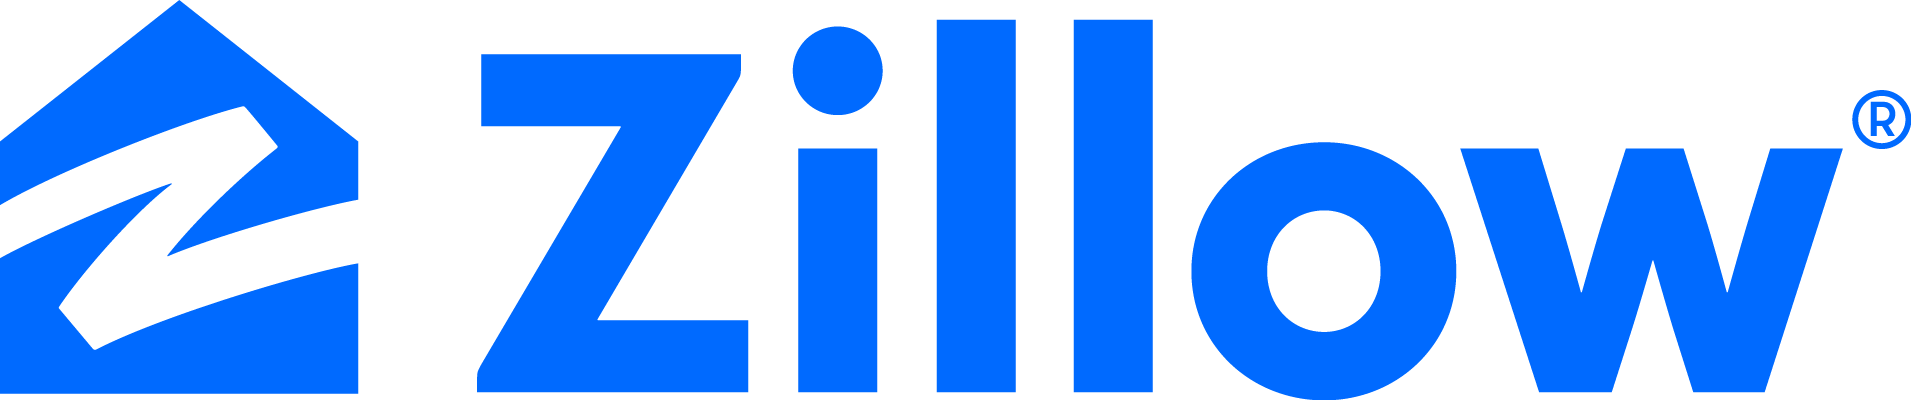 Zillow-logo